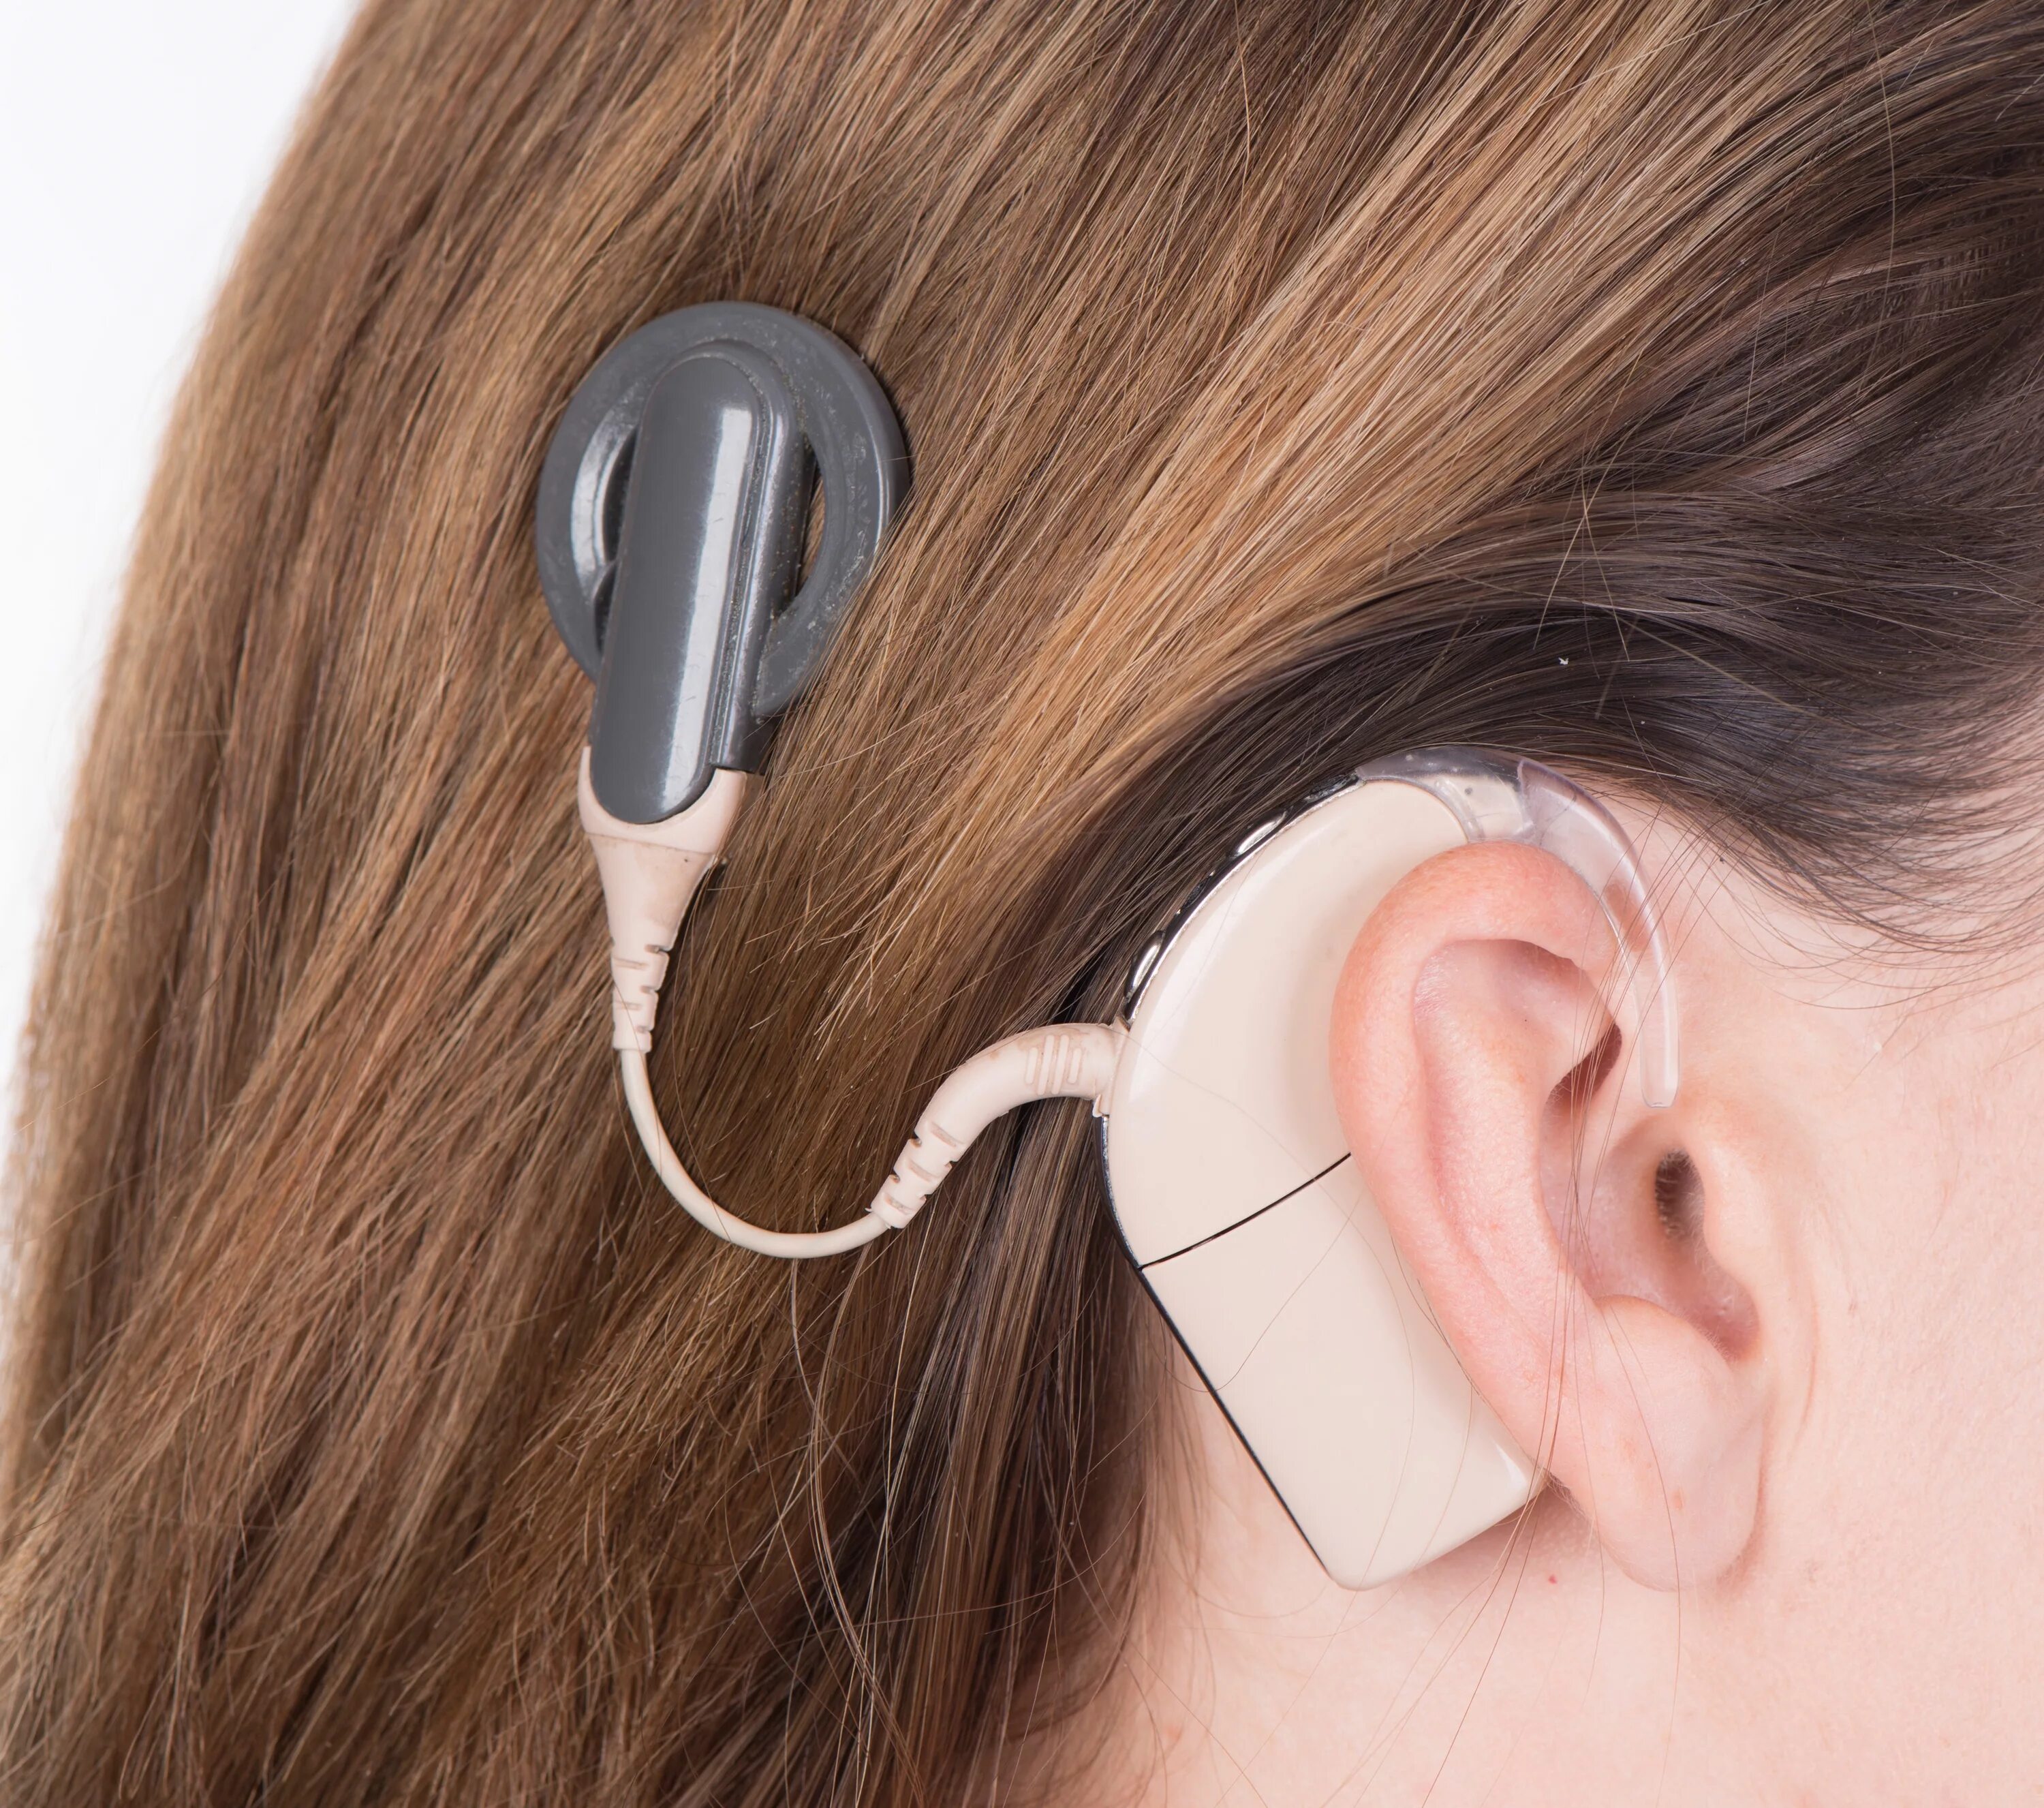 Аппарат Cochlear кохлеарный. Слуховой аппарат кохлеарный имплант. Кохлеарный имплант Кохлер. Аппарат для глухих кохлеарная имплантация. Message hearing